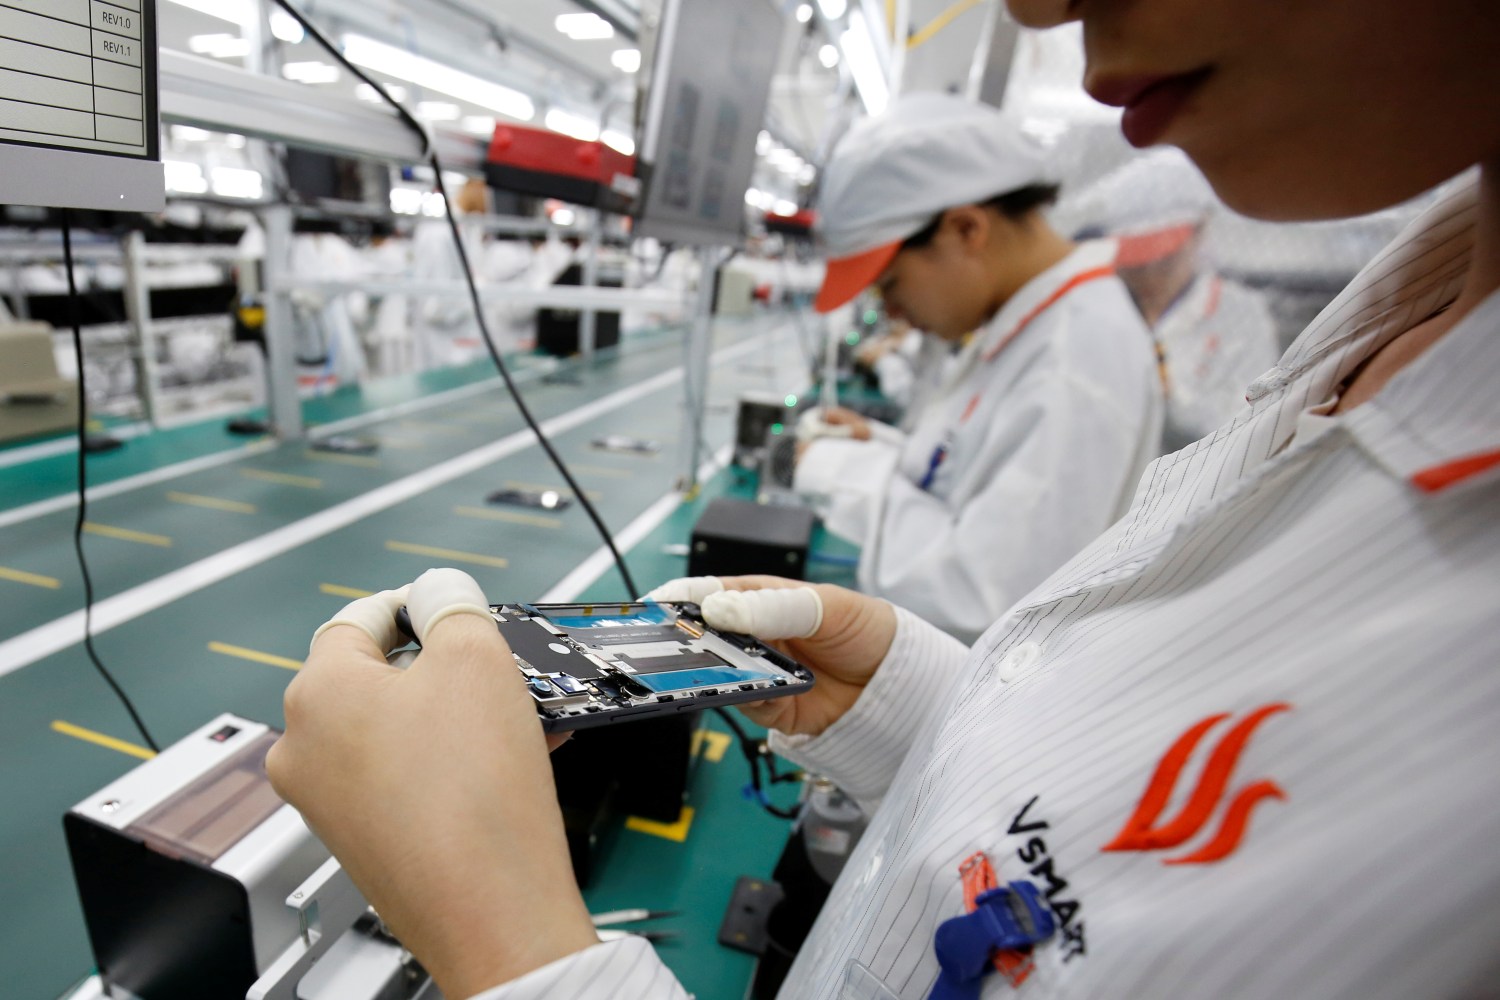 A manufacturer works at an assembly line of Vingroup's Vsmart phone in Hai Phong, Vietnam December 4, 2018. REUTERS/Kham - RC19DC39DA10